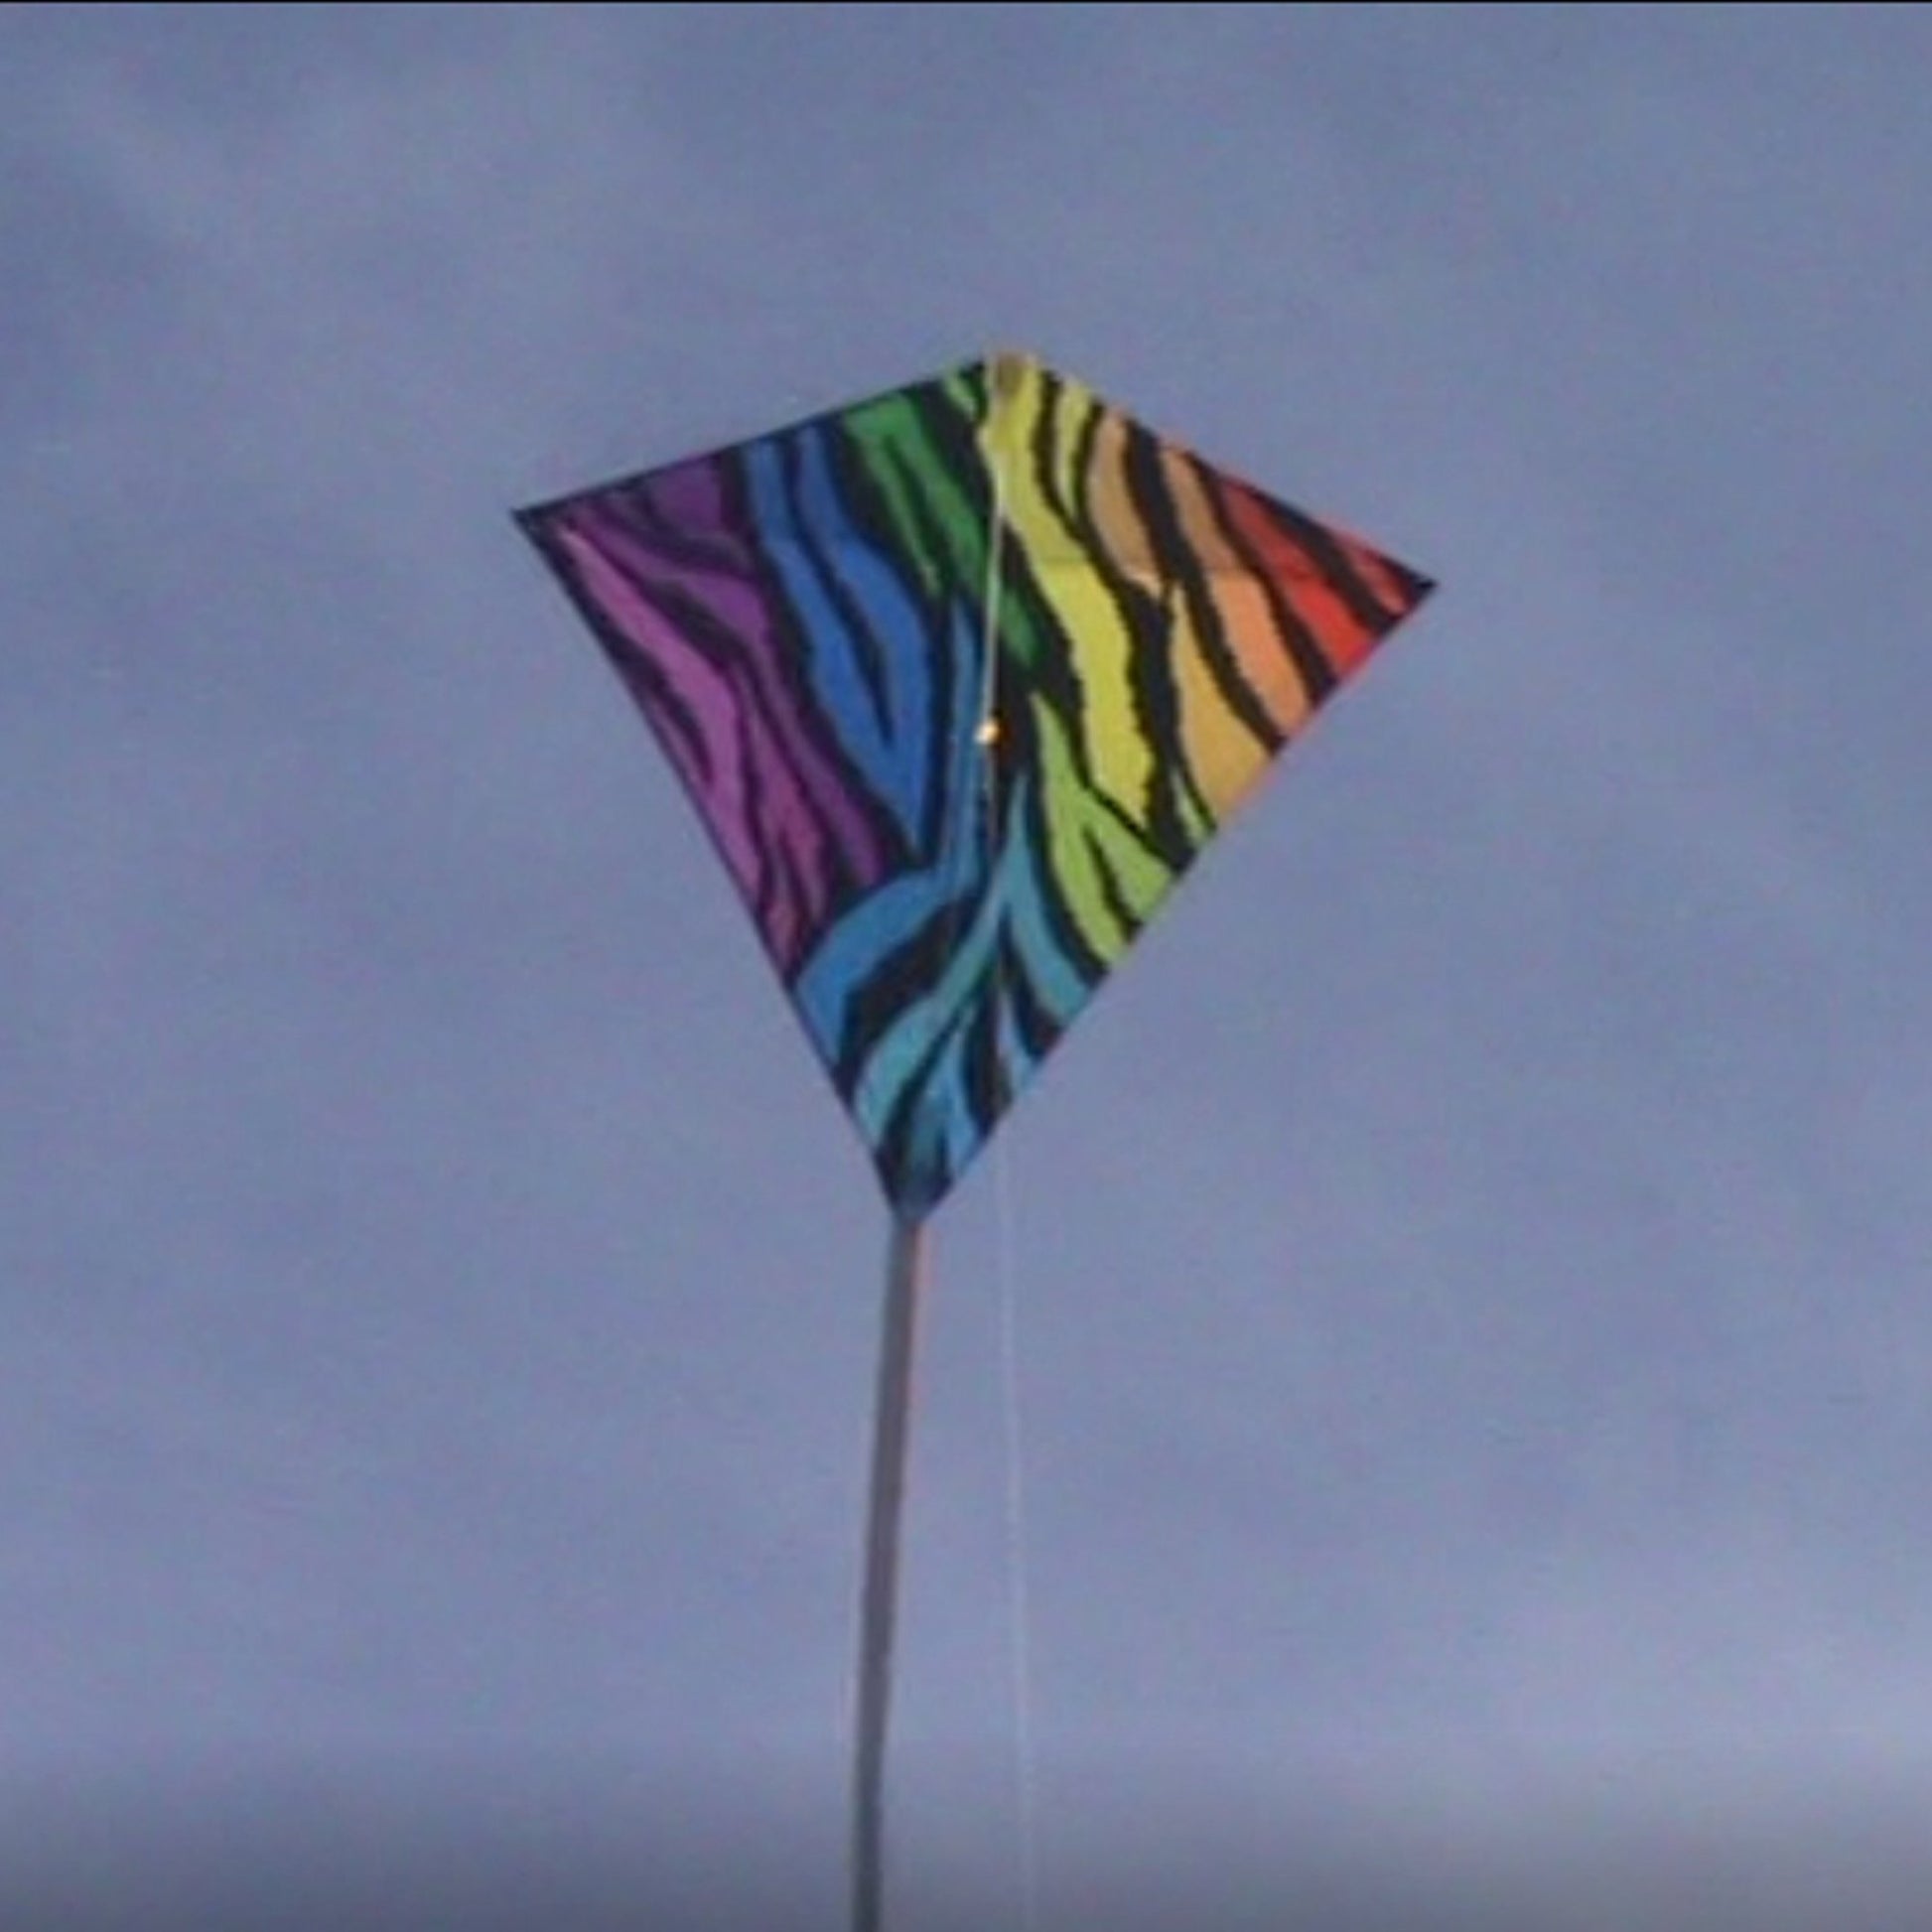 windnsun winddiamond stripes nylon kite flying